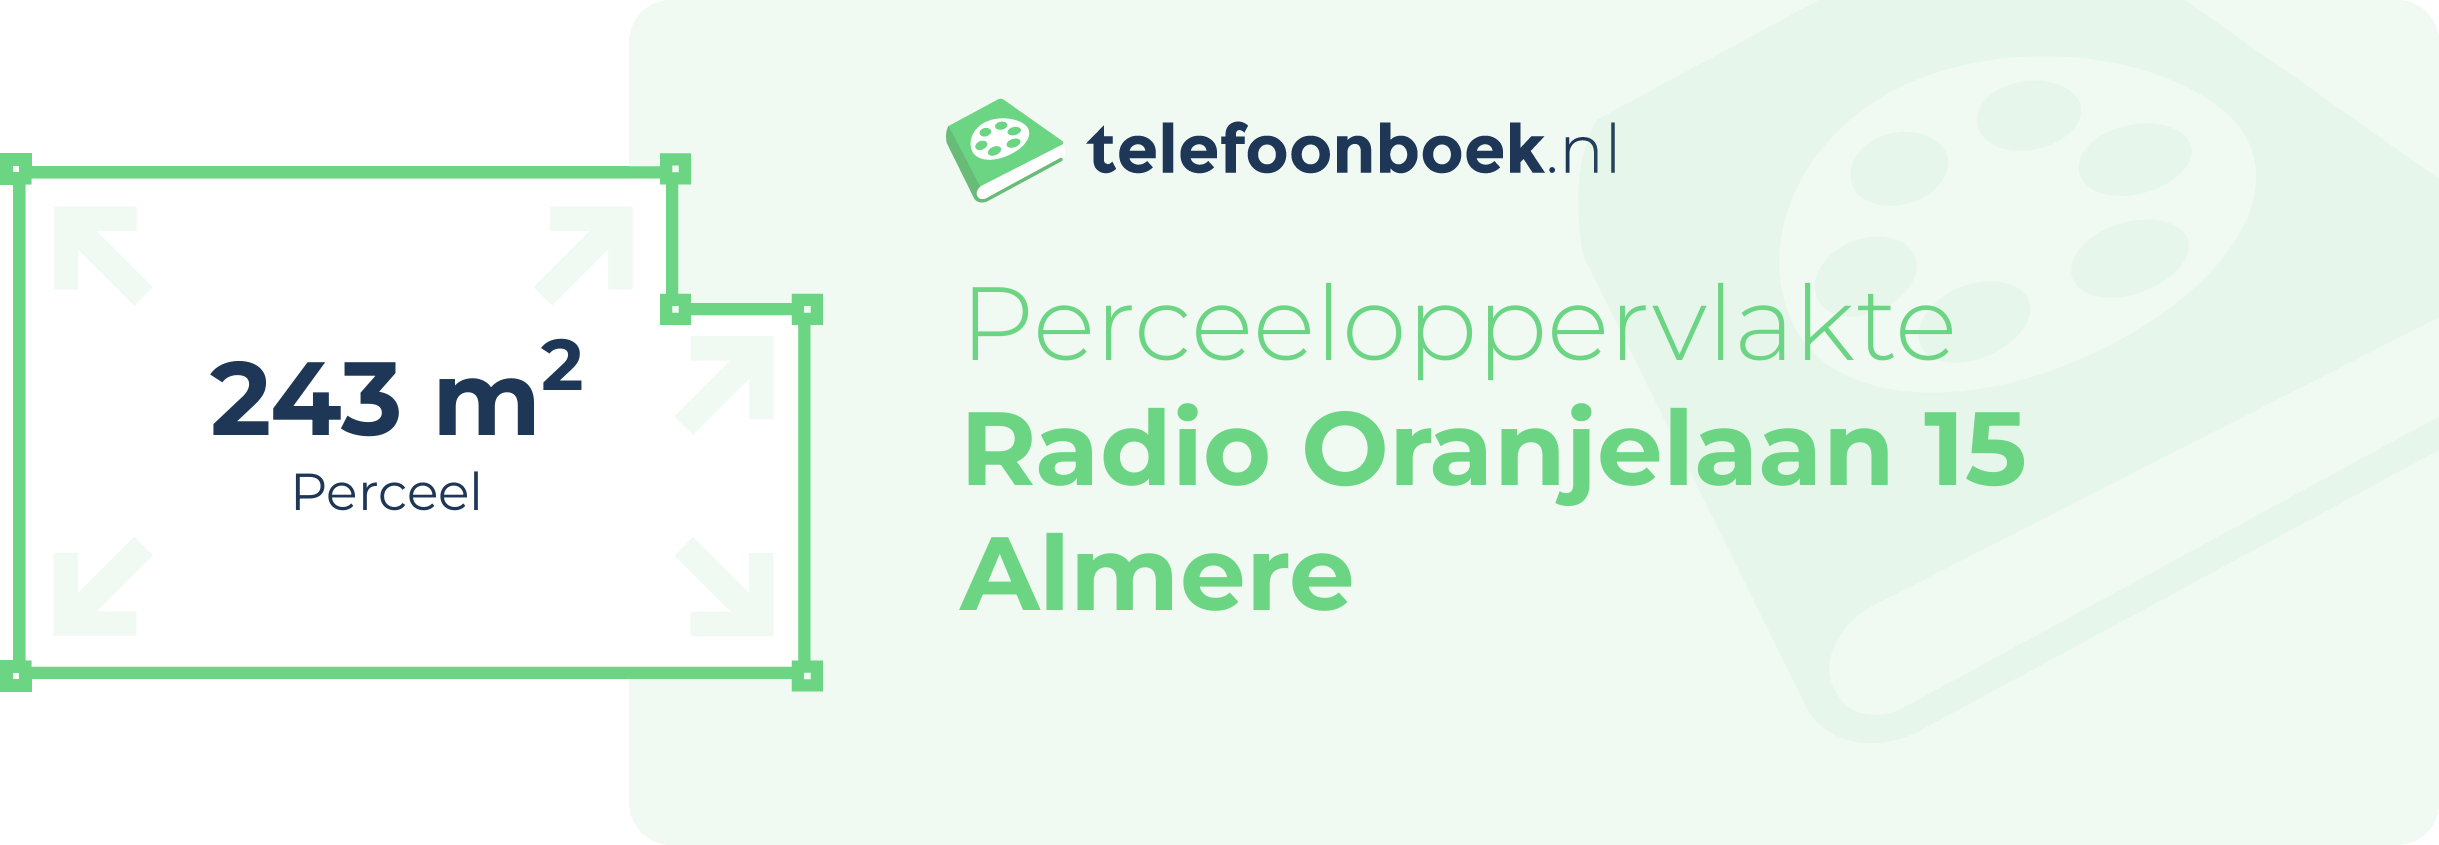 Perceeloppervlakte Radio Oranjelaan 15 Almere